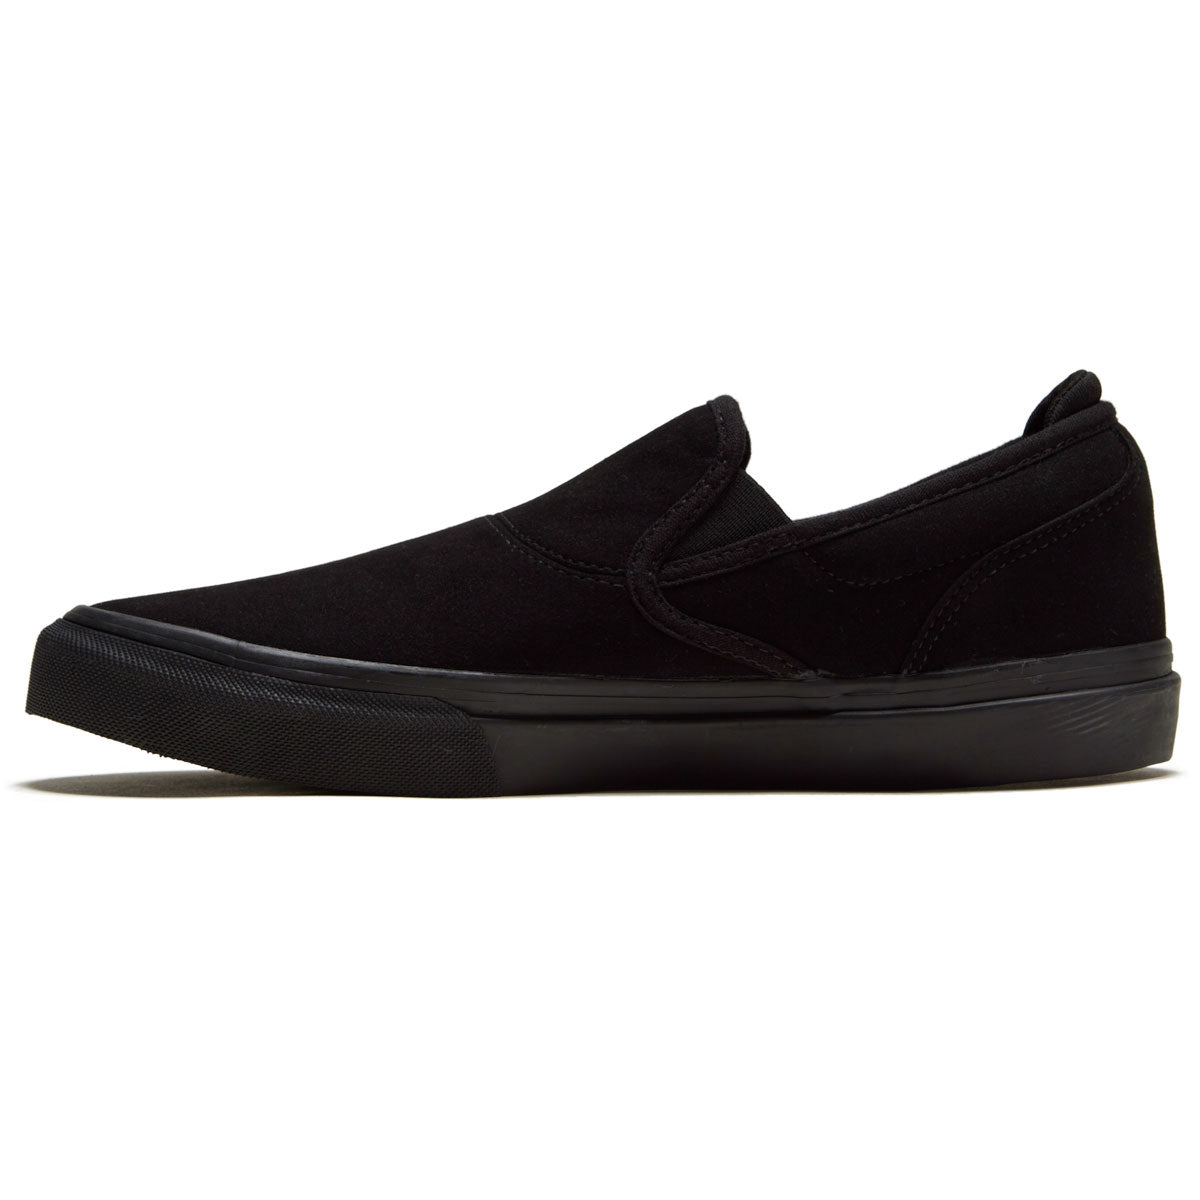 Emerica Wino G6 Slip-on Shoes - Black image 2